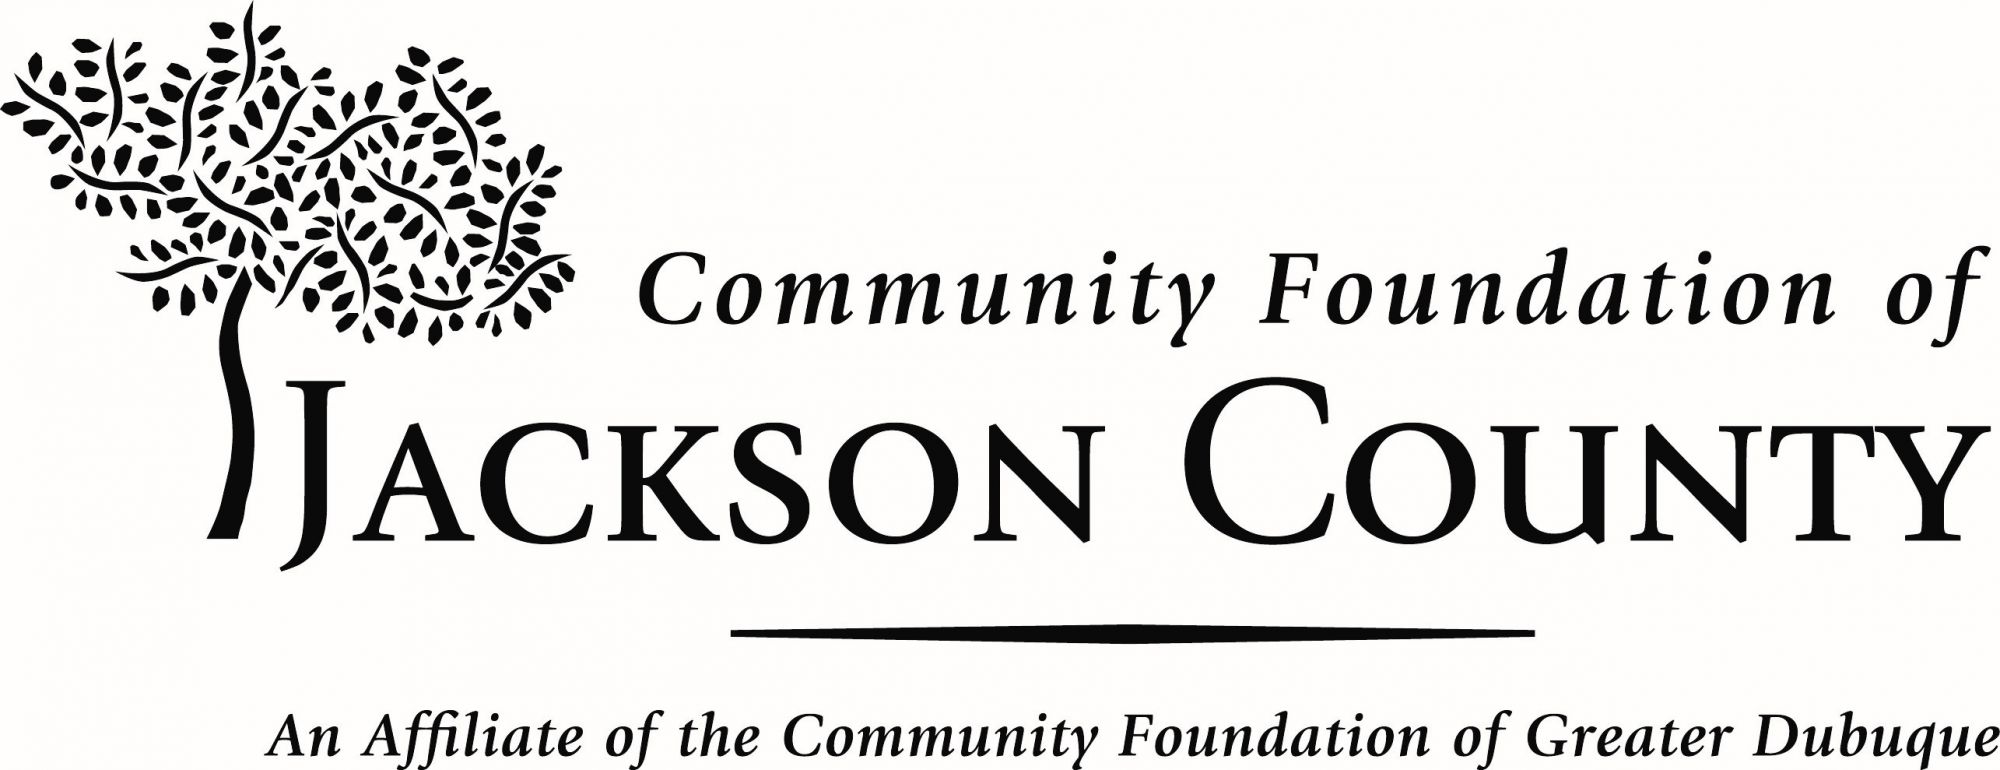 Community Foundation of Jackson County's Logo